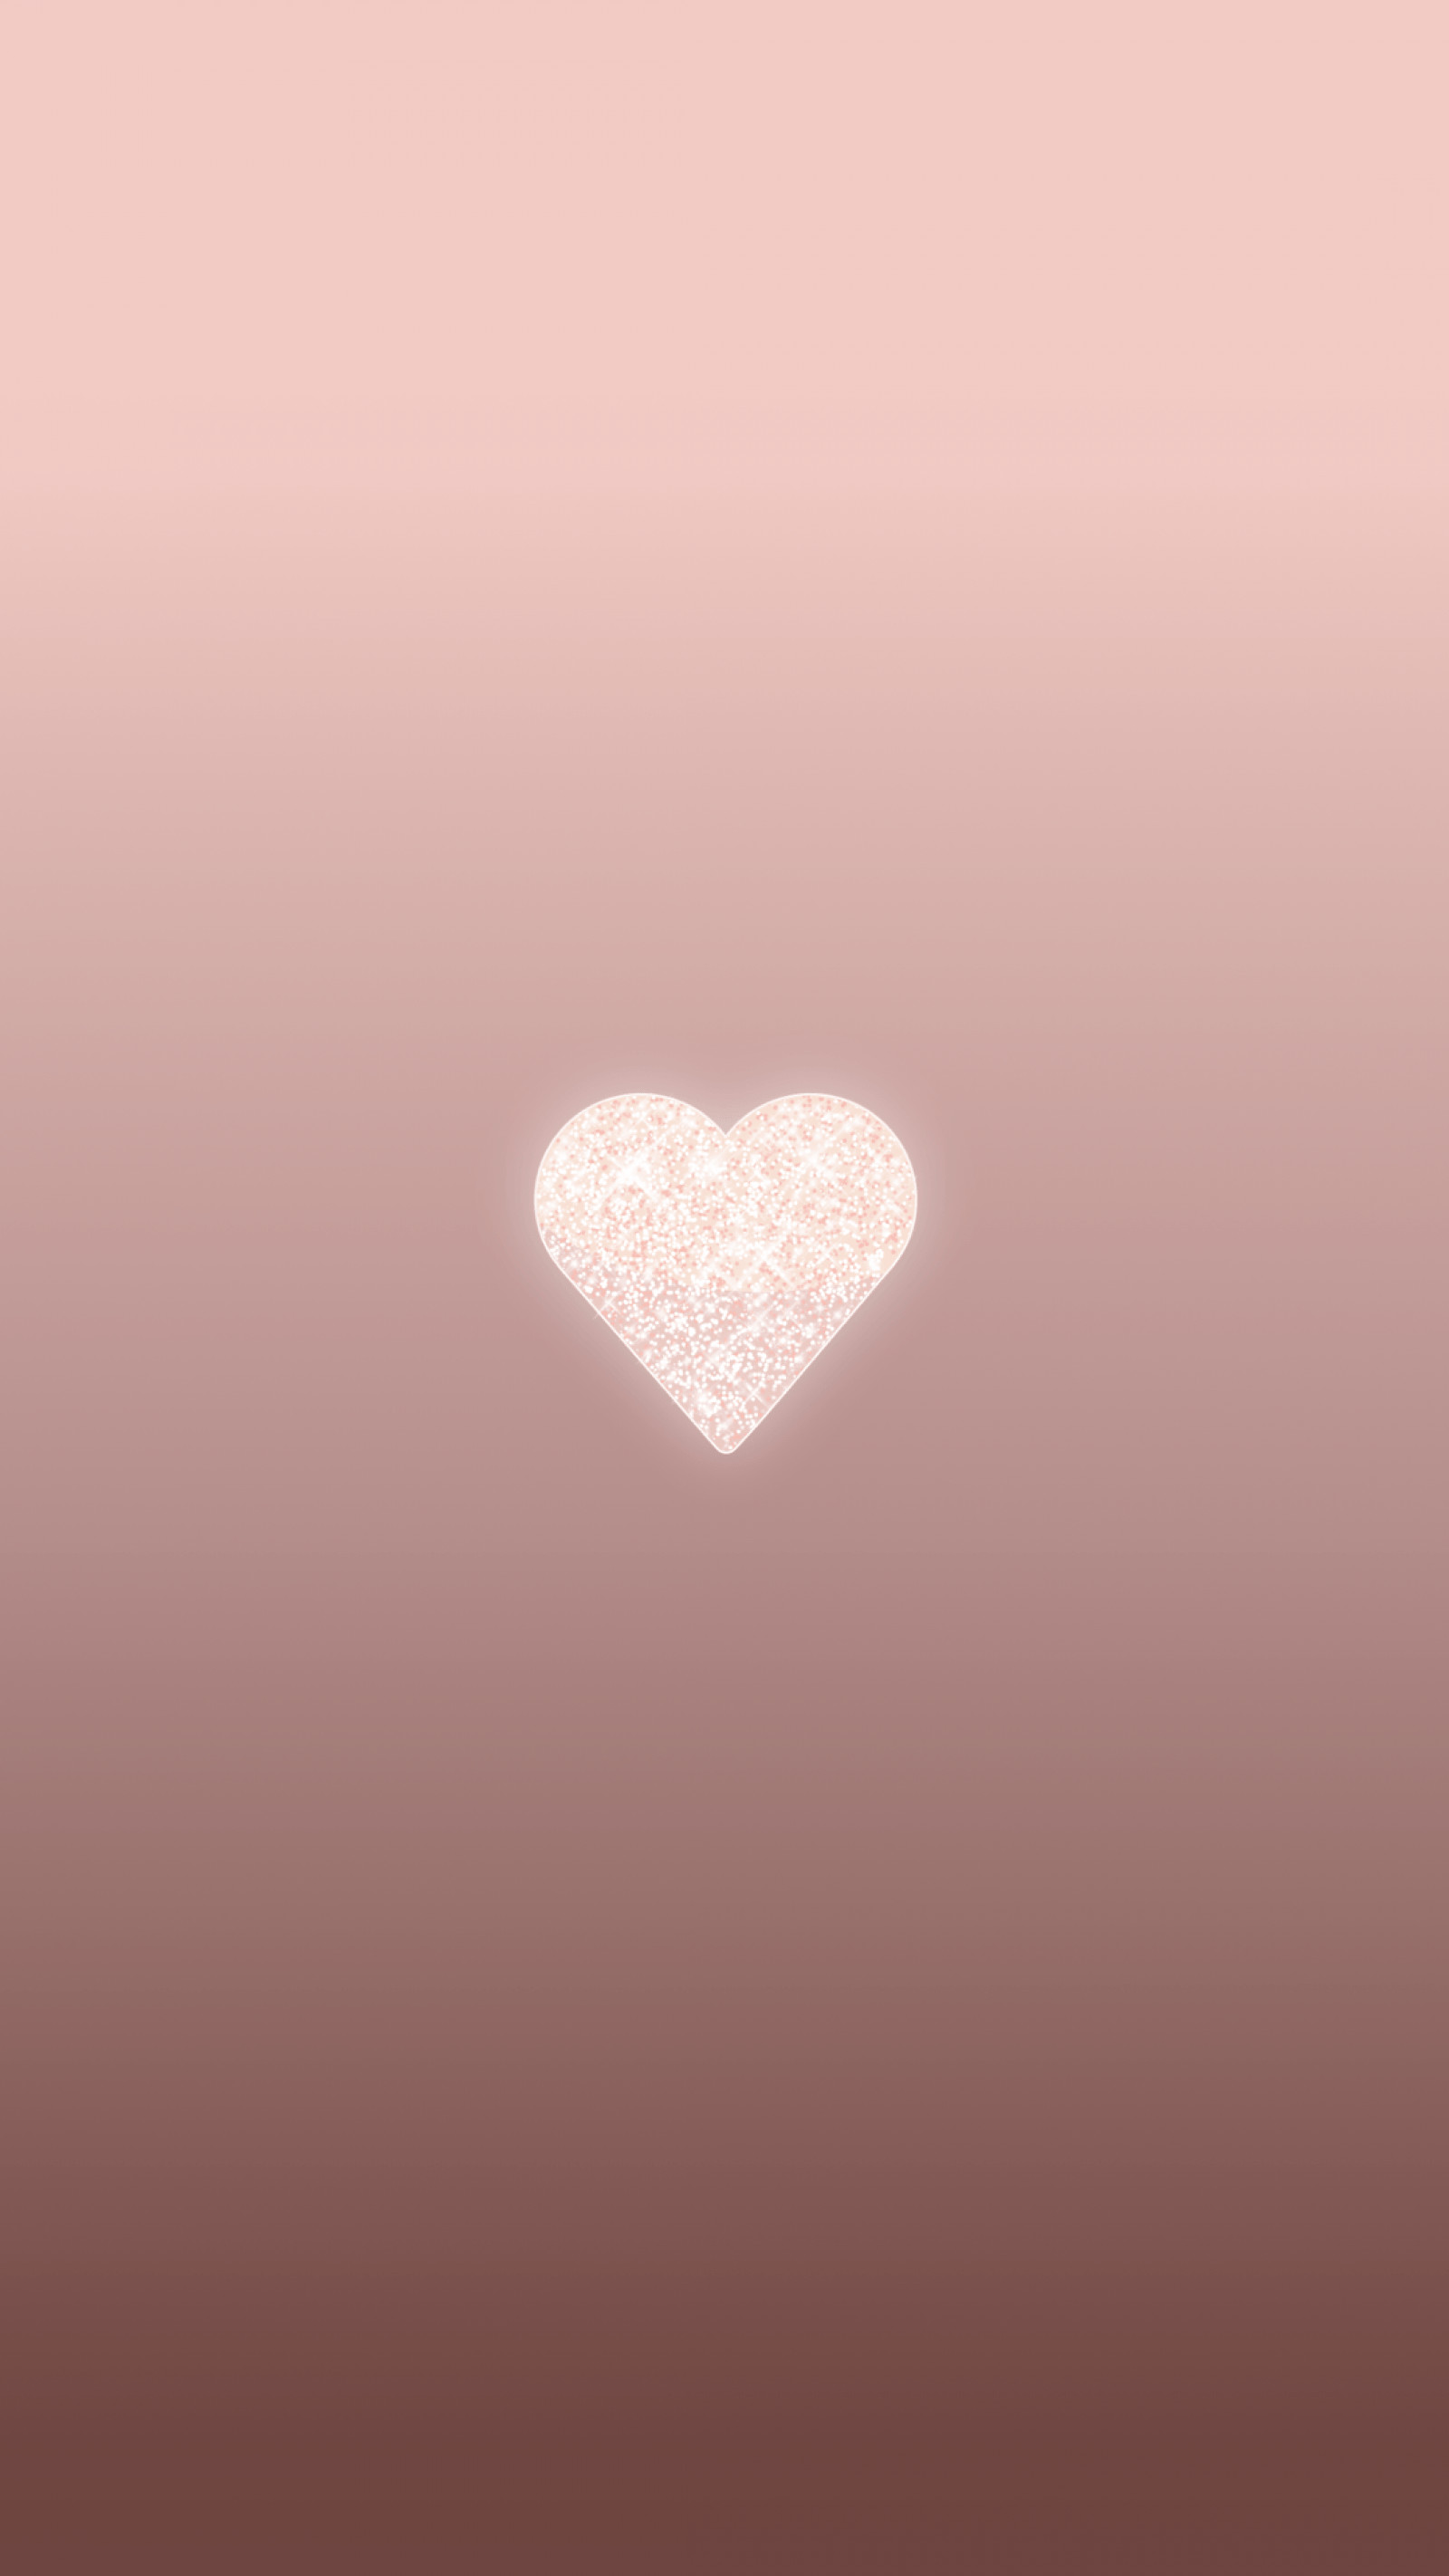 Cute Heart Wallpaper for iPhone (71+